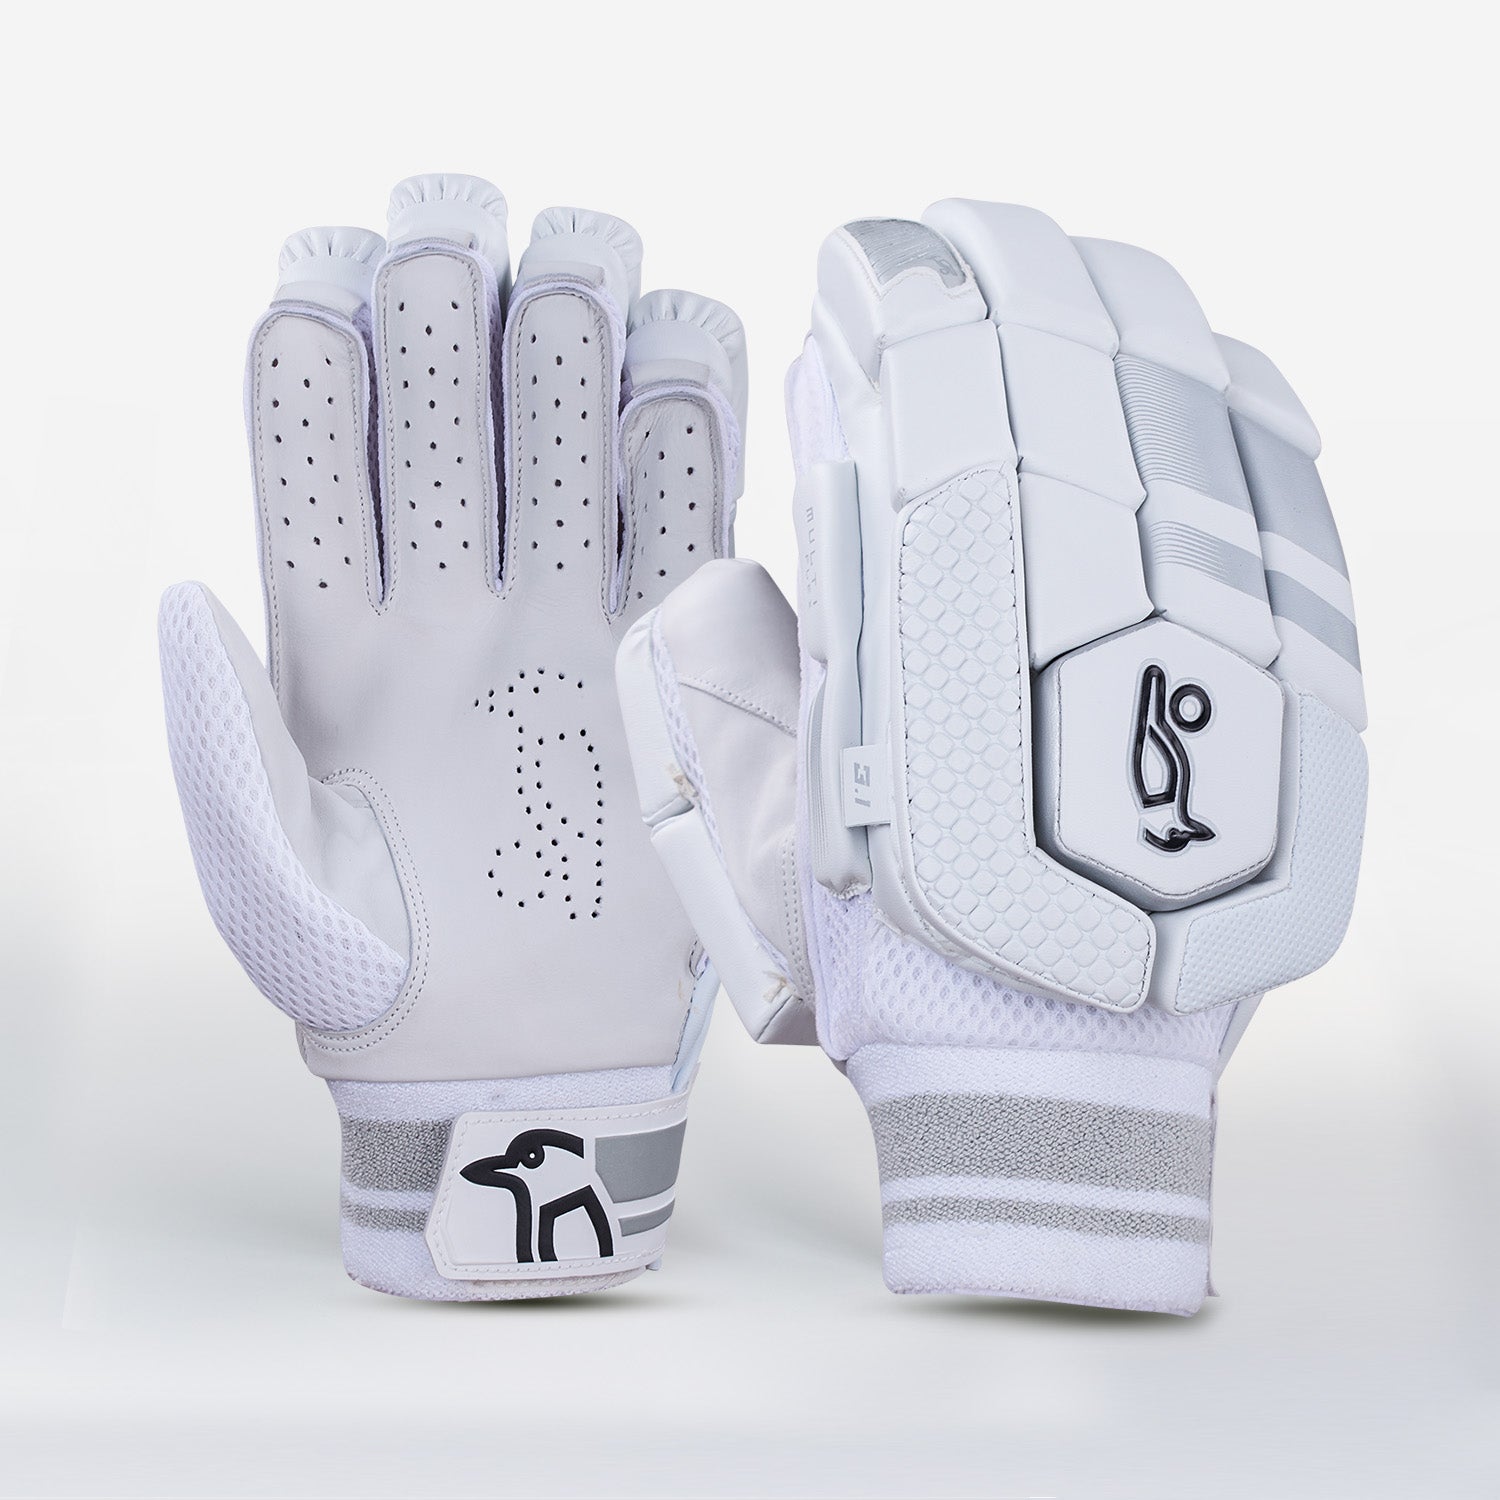 Kookaburra Ghost 3.1 Batting Gloves